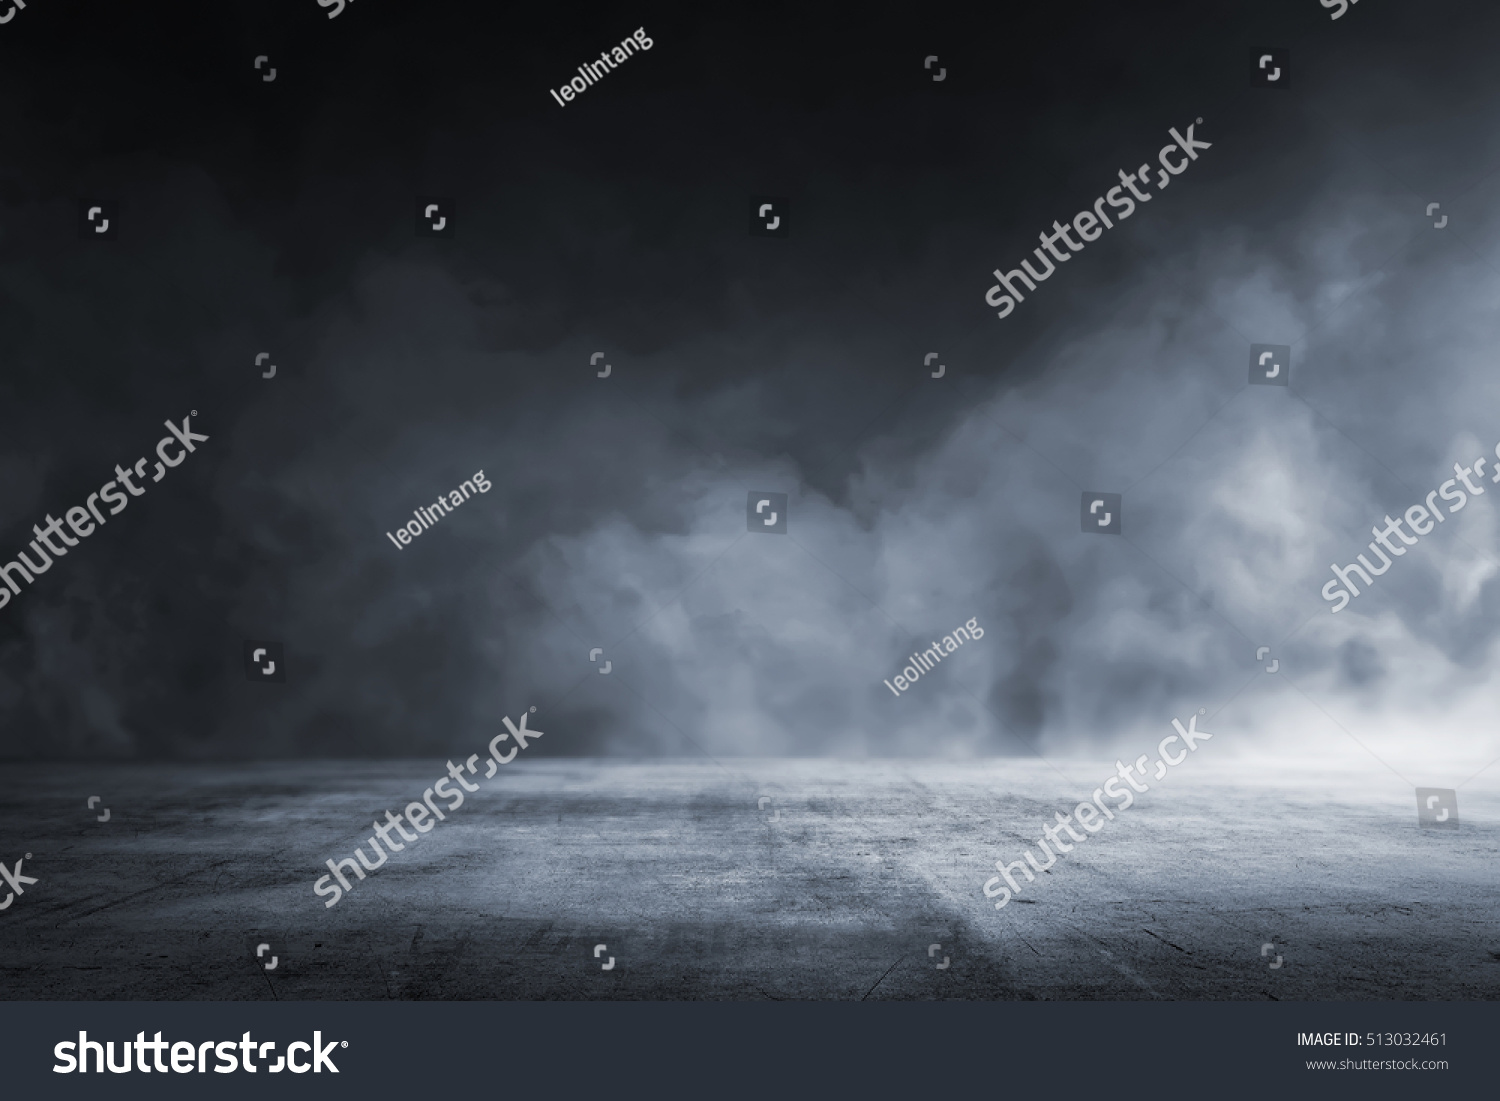 Texture dark concrete floor with mist or fog #513032461